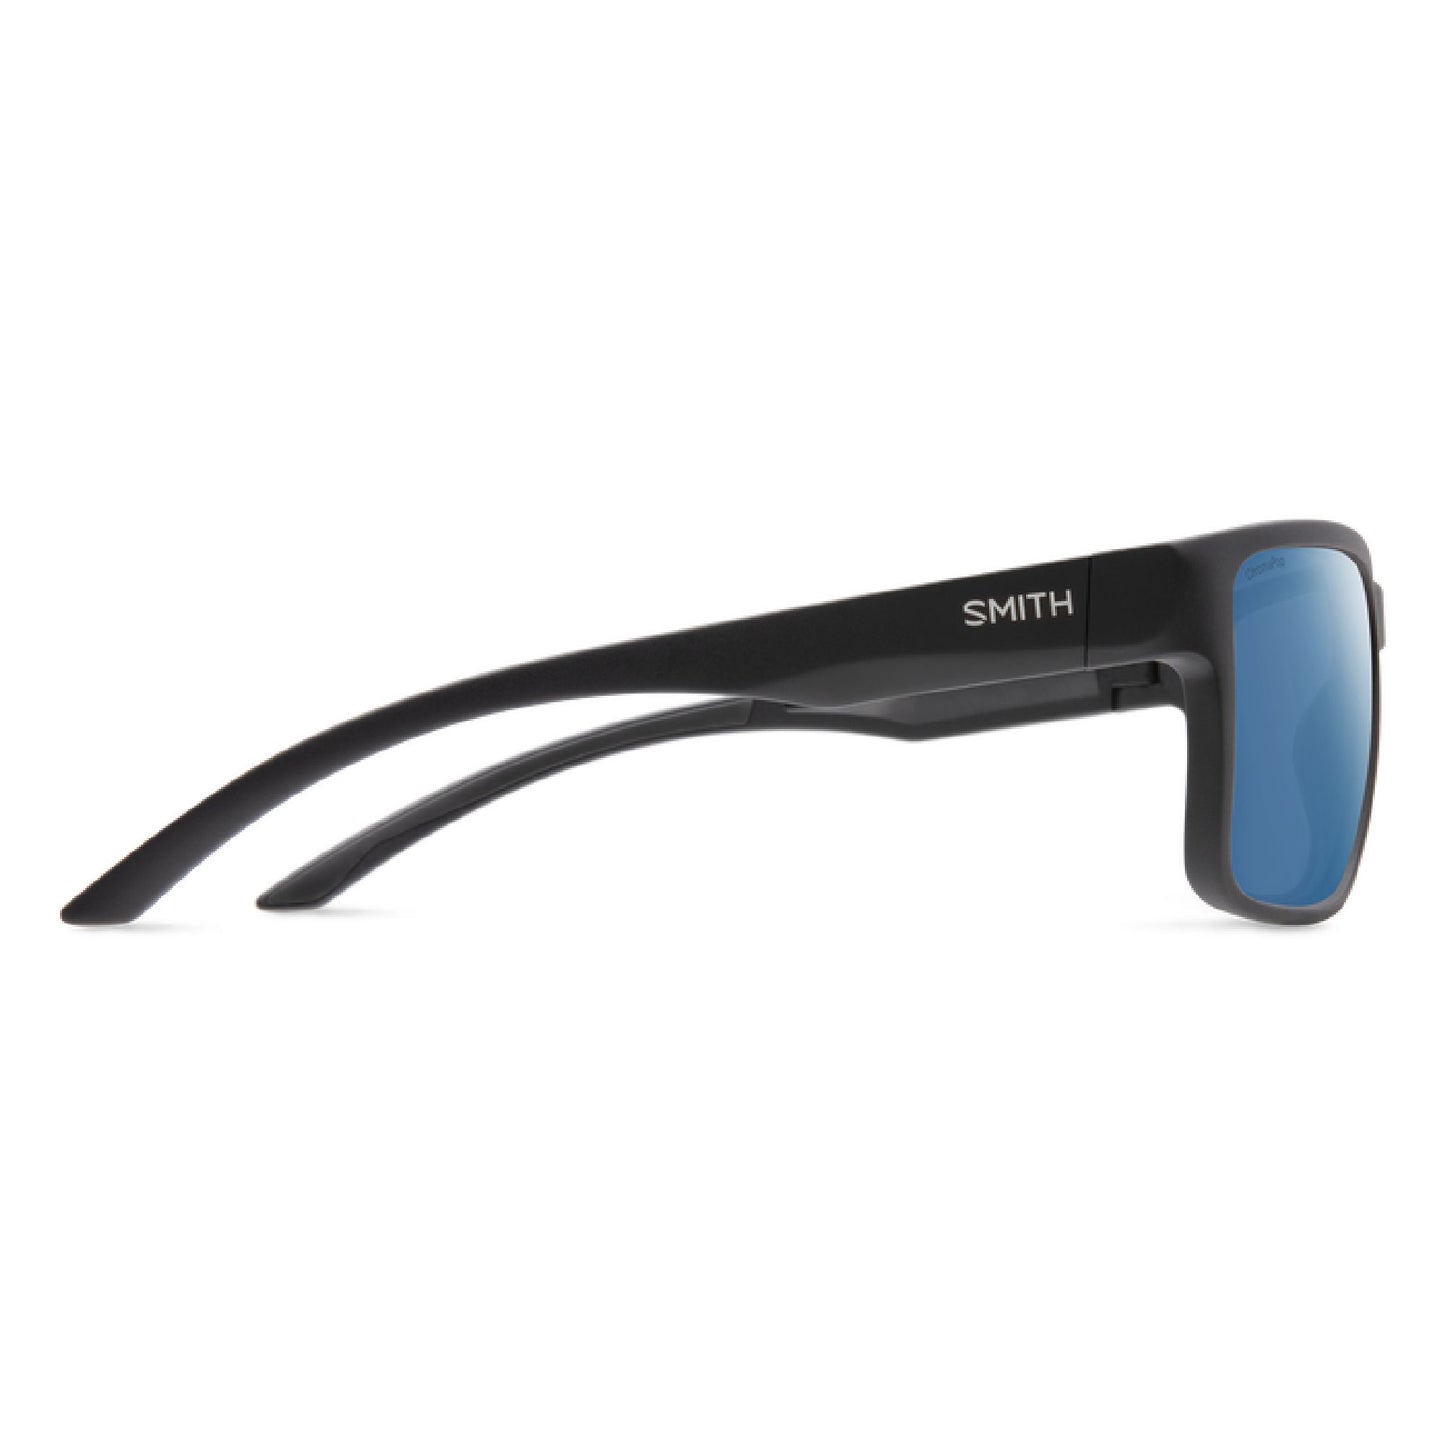 Smith Emerge Sunglasses Matte Black / ChromaPop Polarized Blue Mirror Lens Sunglasses